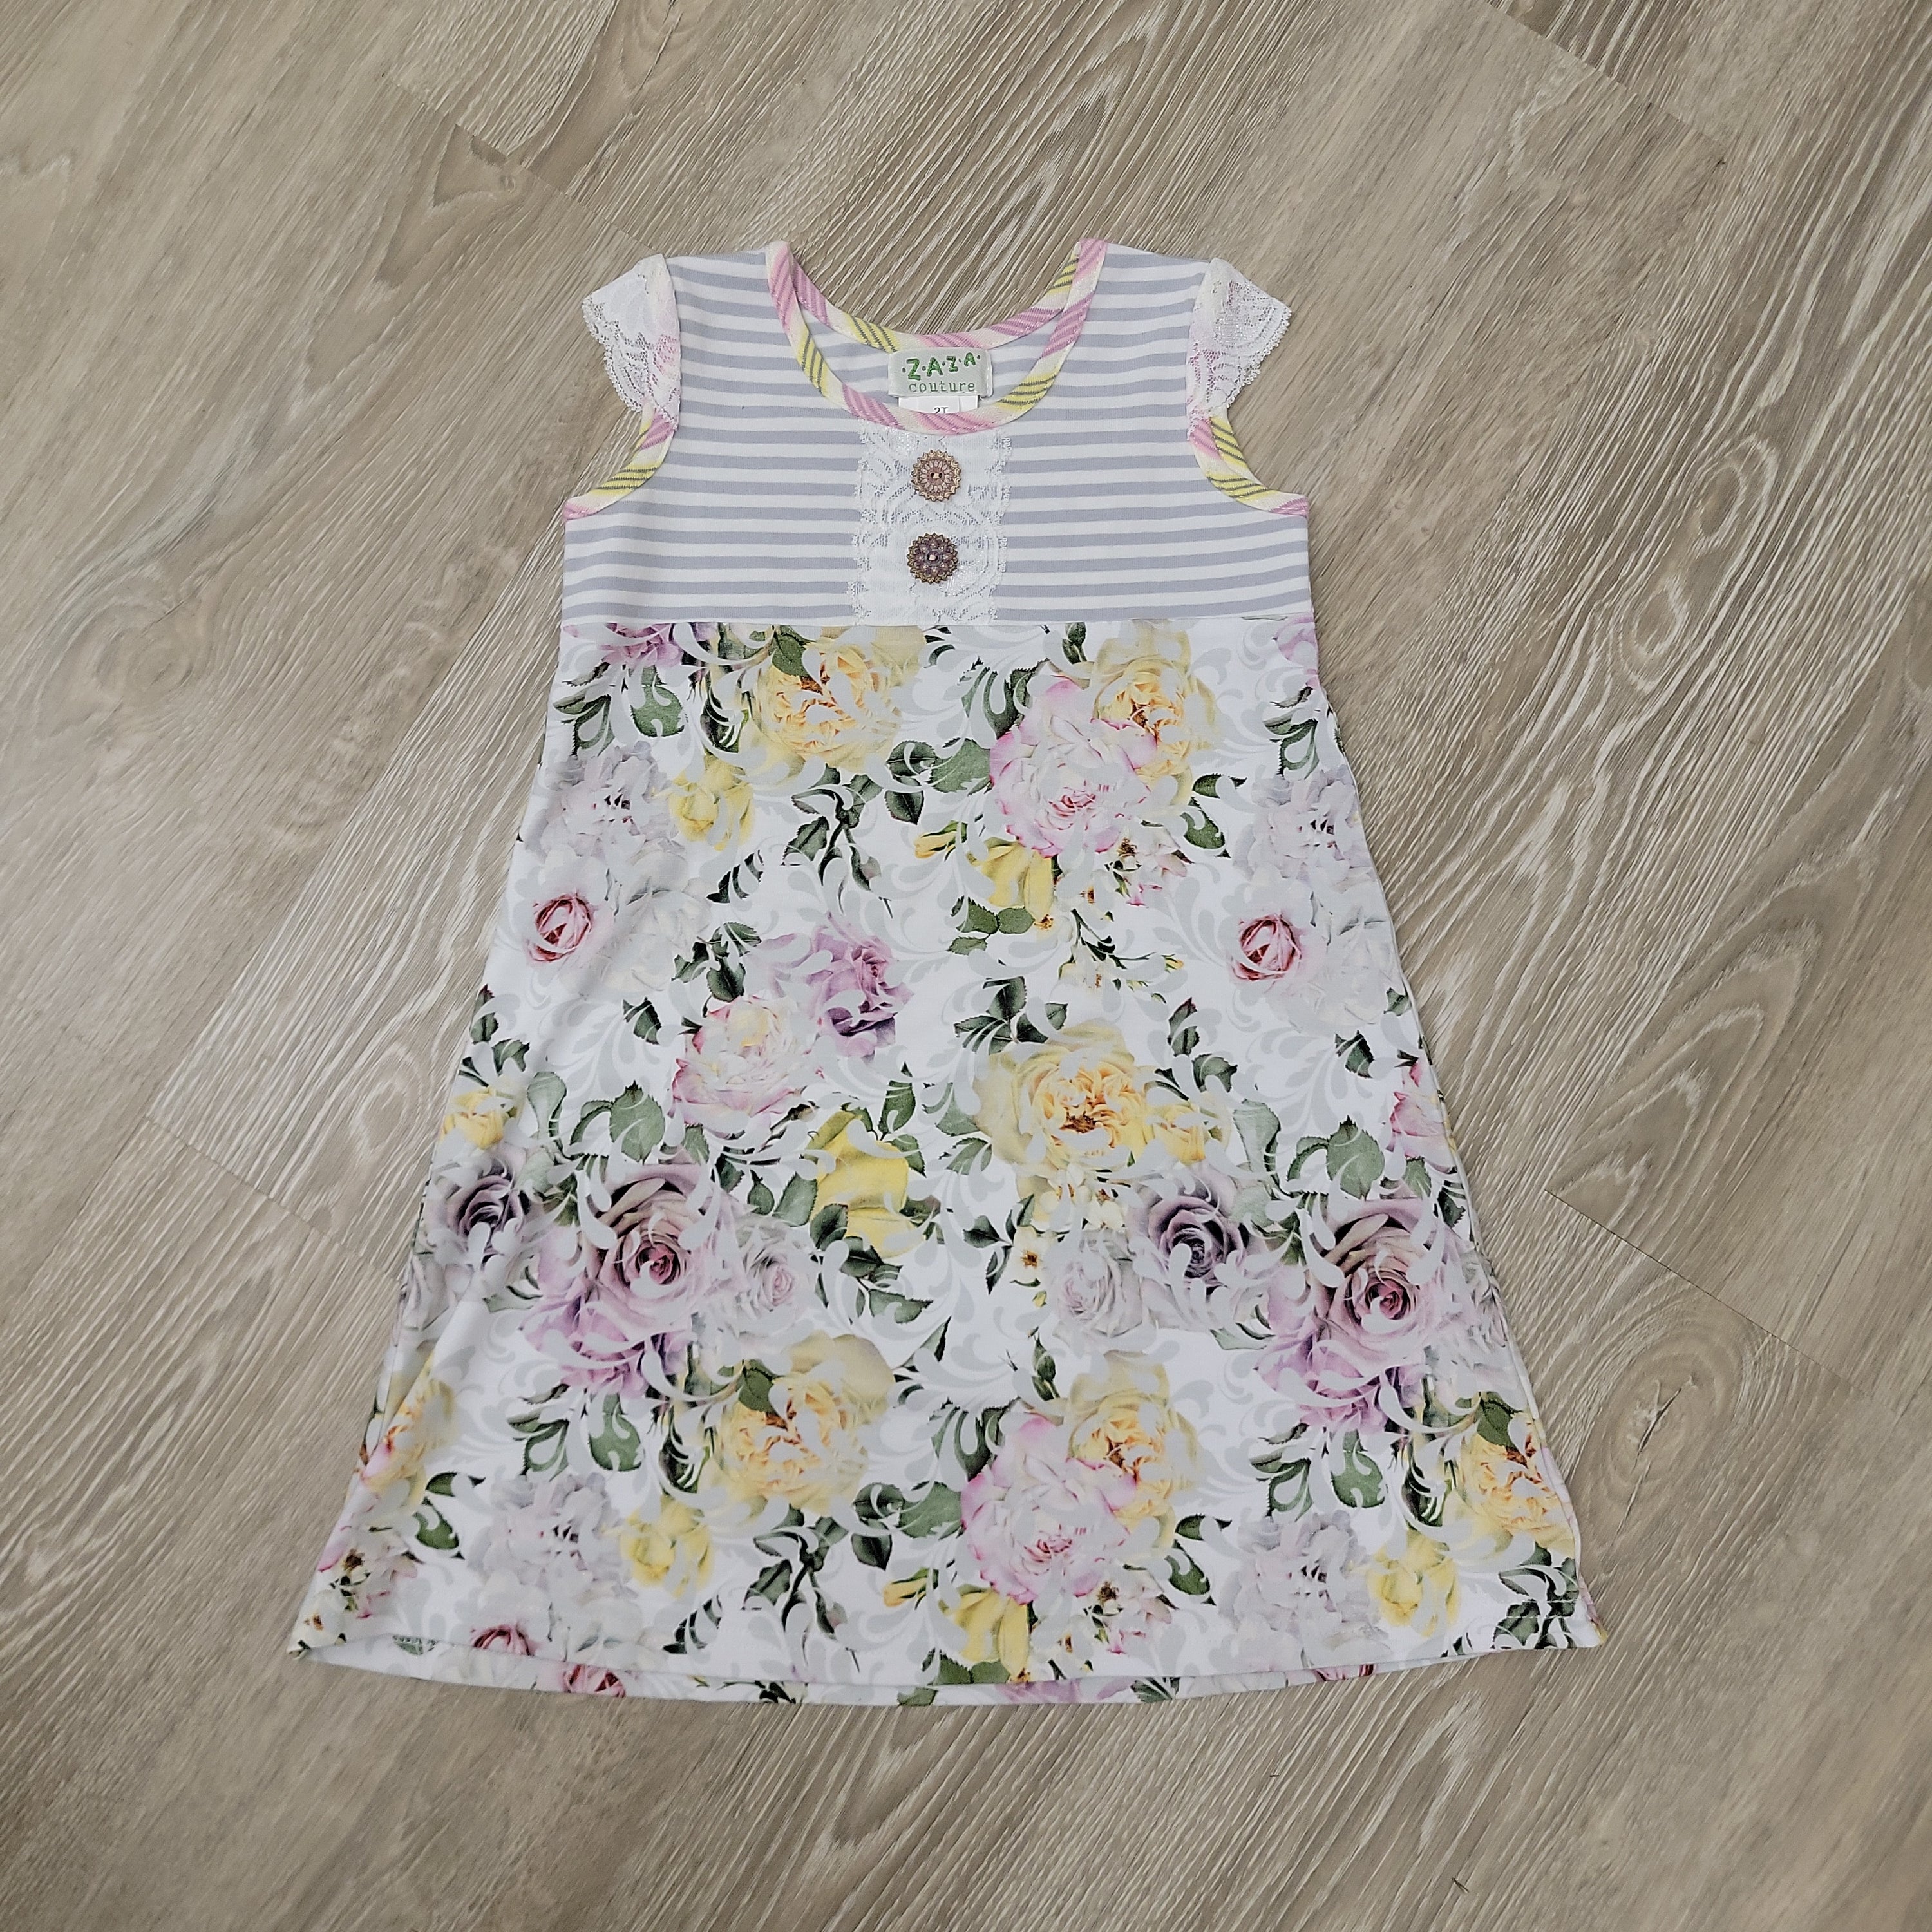 ZaZa Couture Gray Stripes & Floral Print Dress-ZAZA COUTURE-Little Giant Kidz